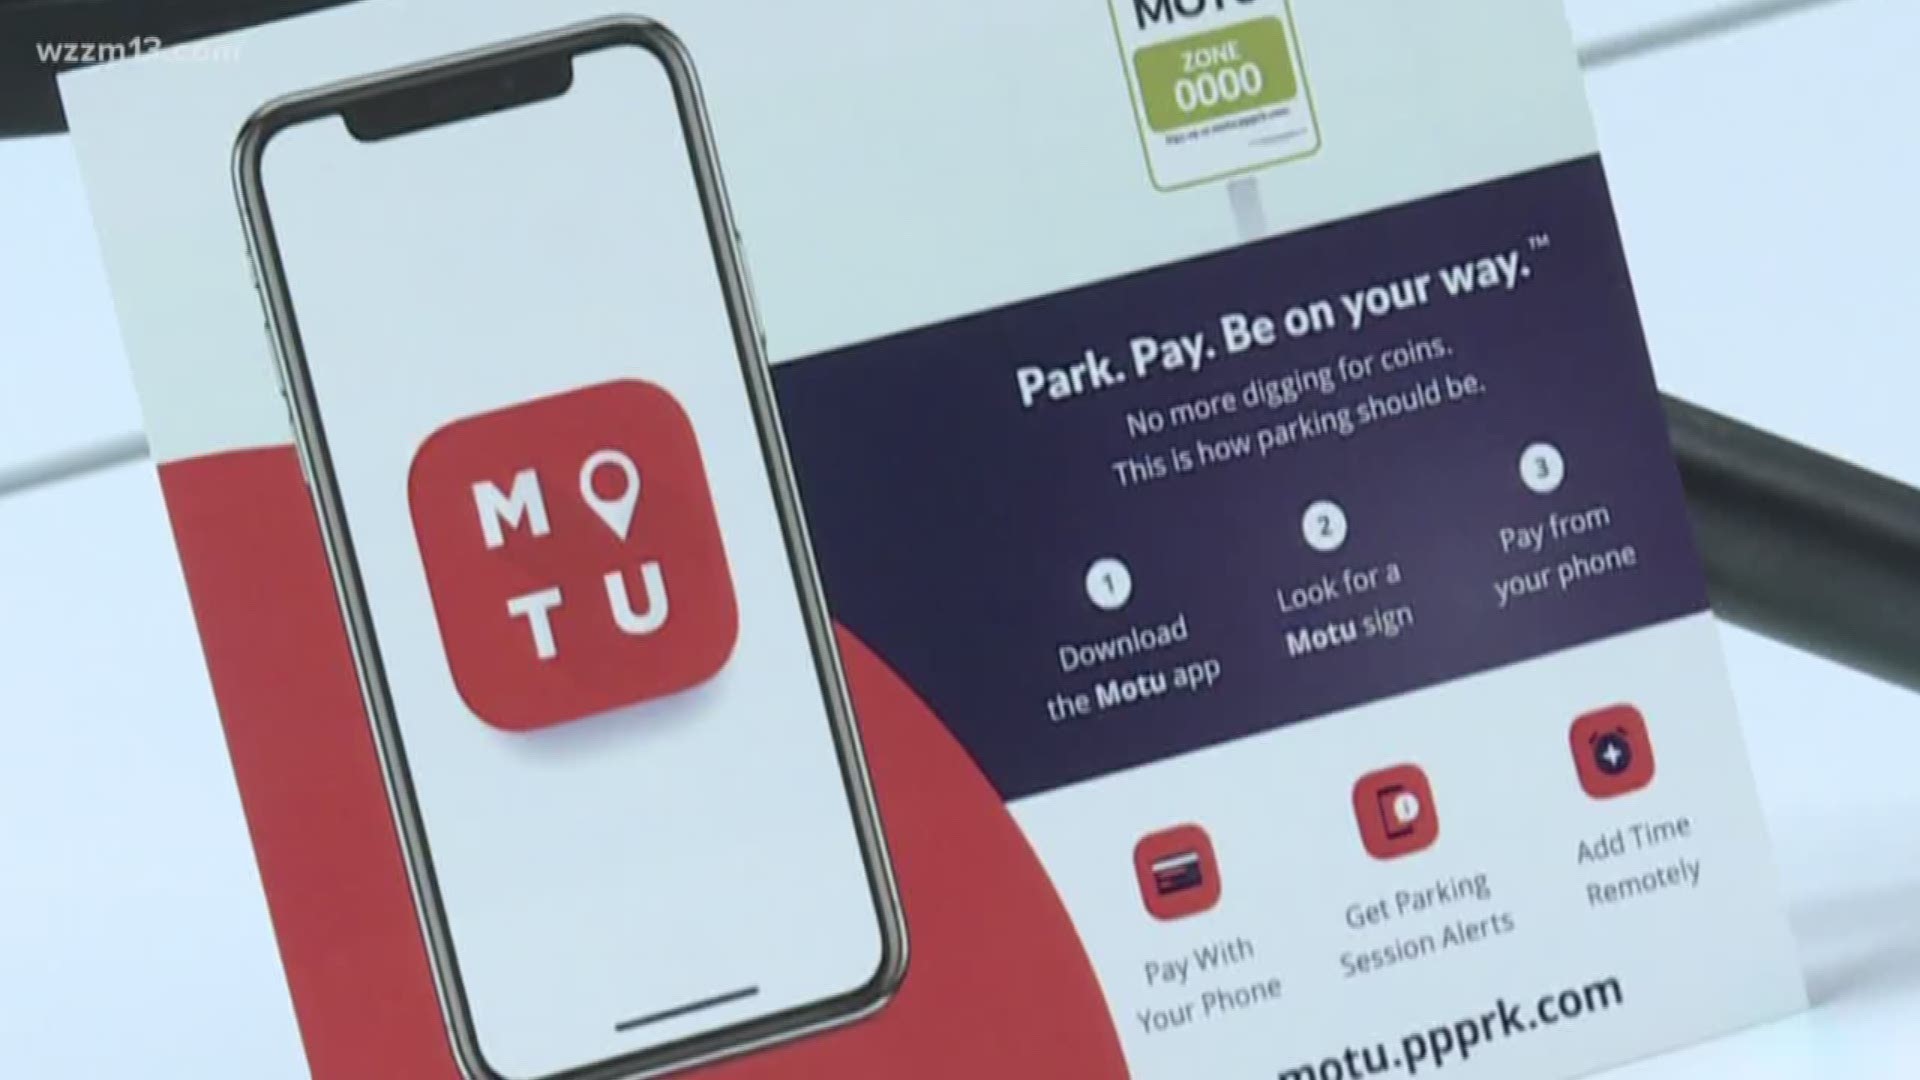 Grand Rapids launching new parking app